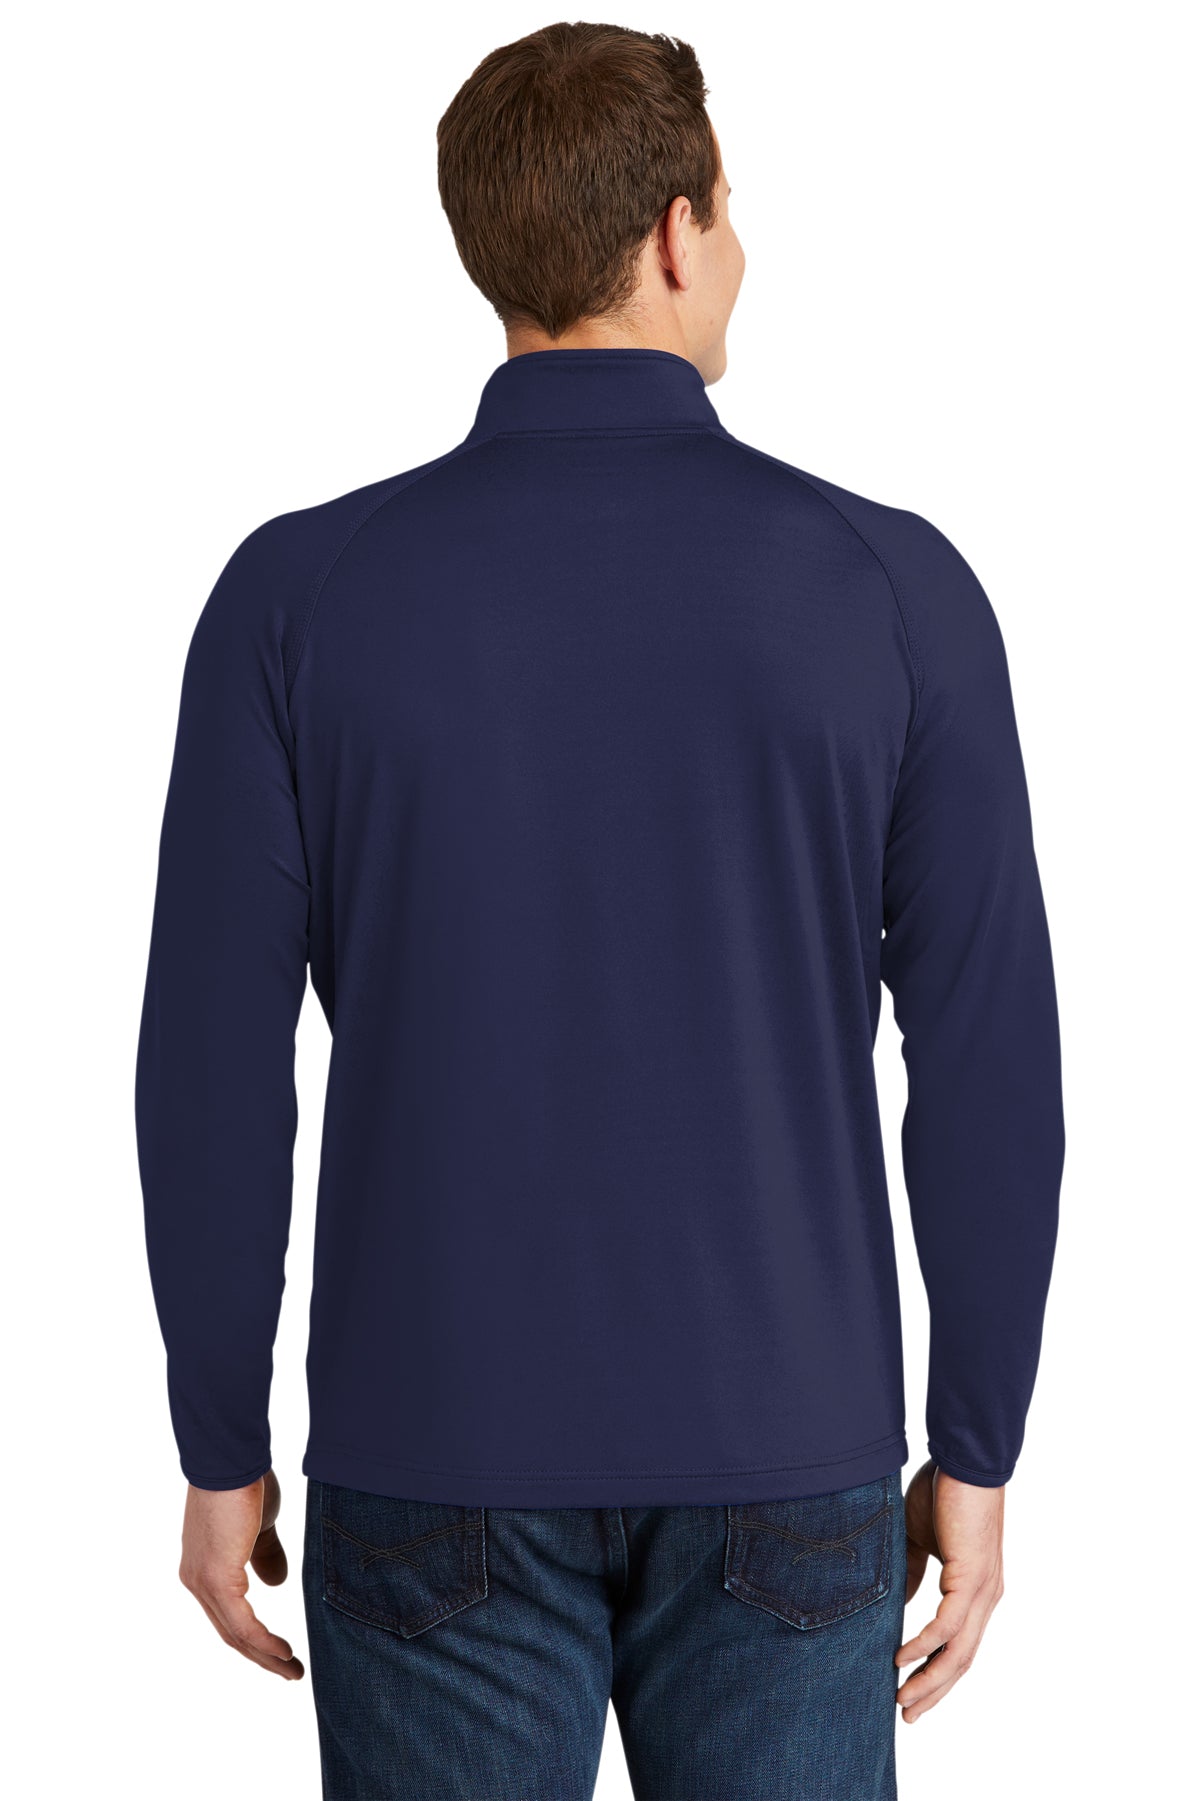 sport-tek_tst850 _true navy_company_logo_sweatshirts